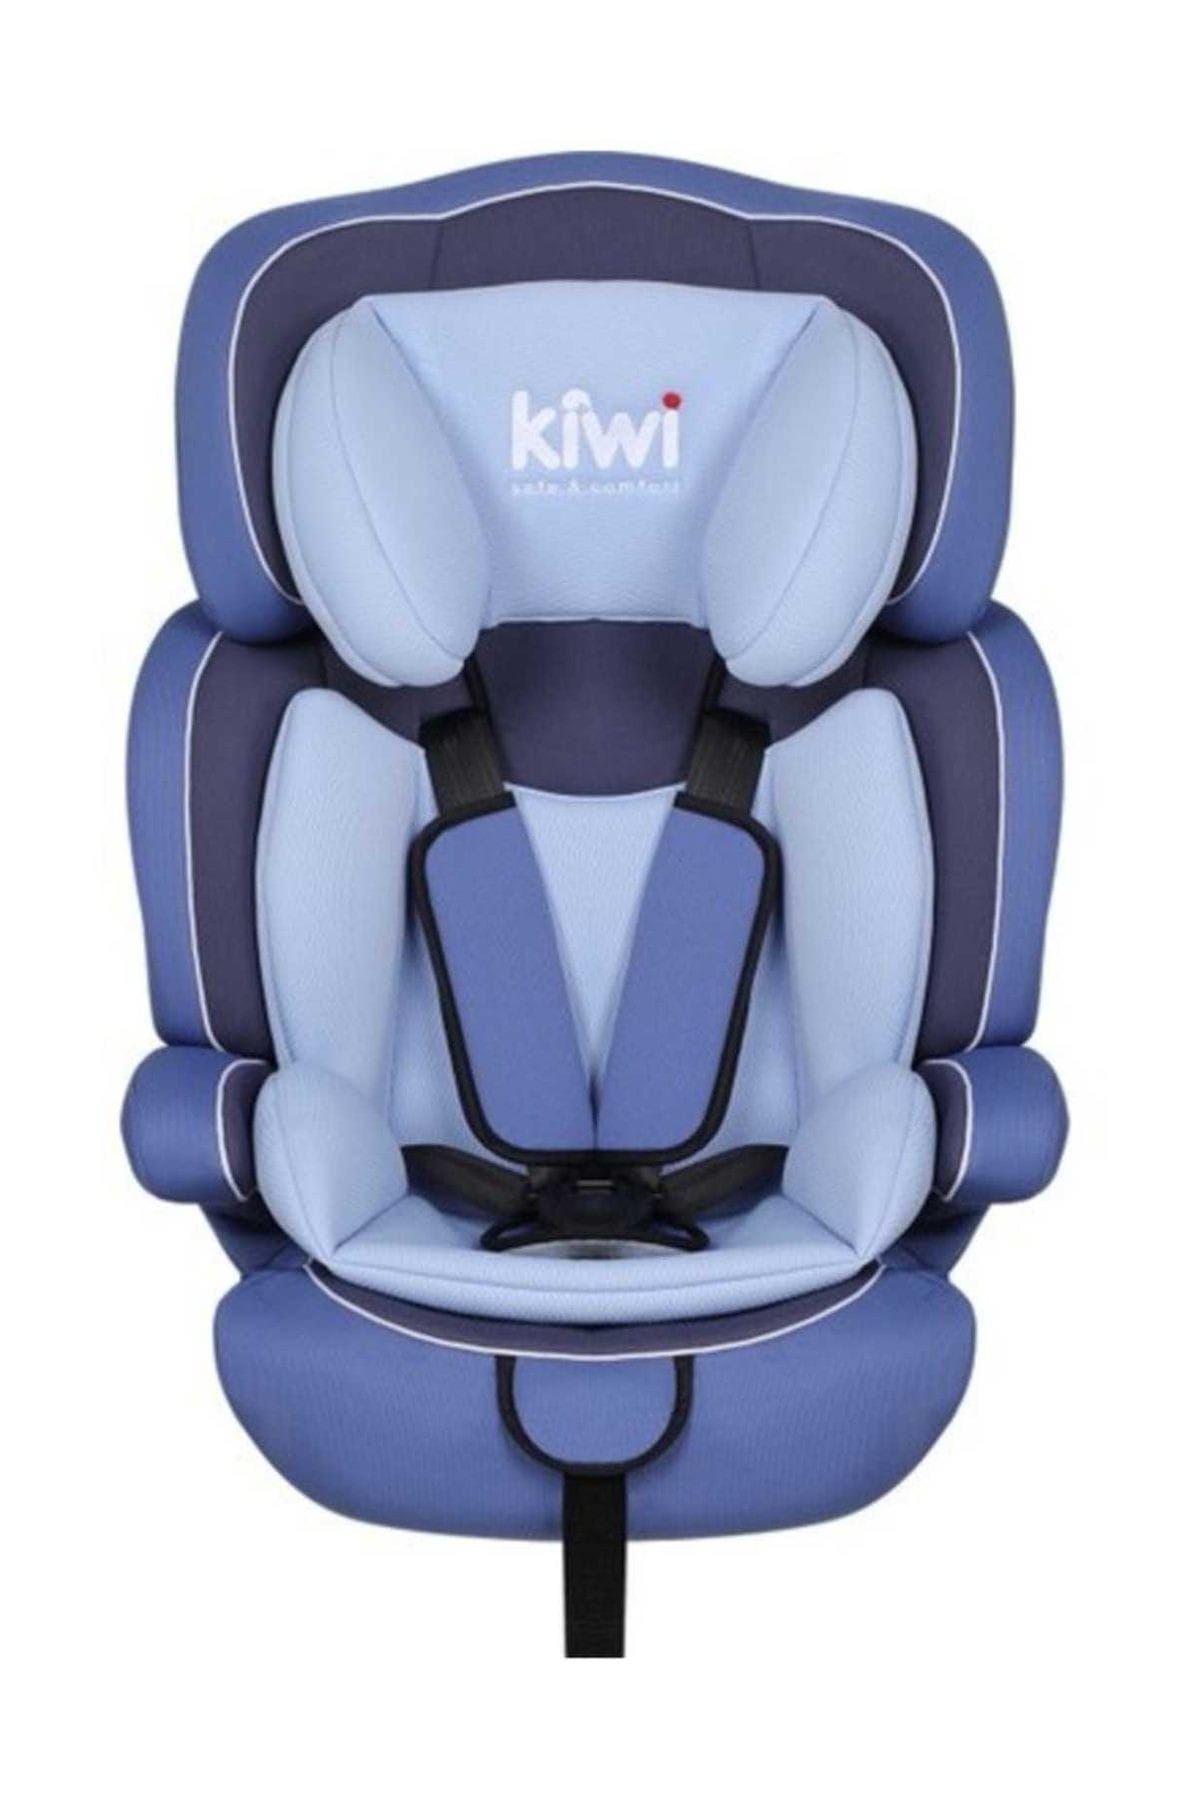 Kiwi Safe&Comfort Smart 9-36 Kg Oto Koltuğu